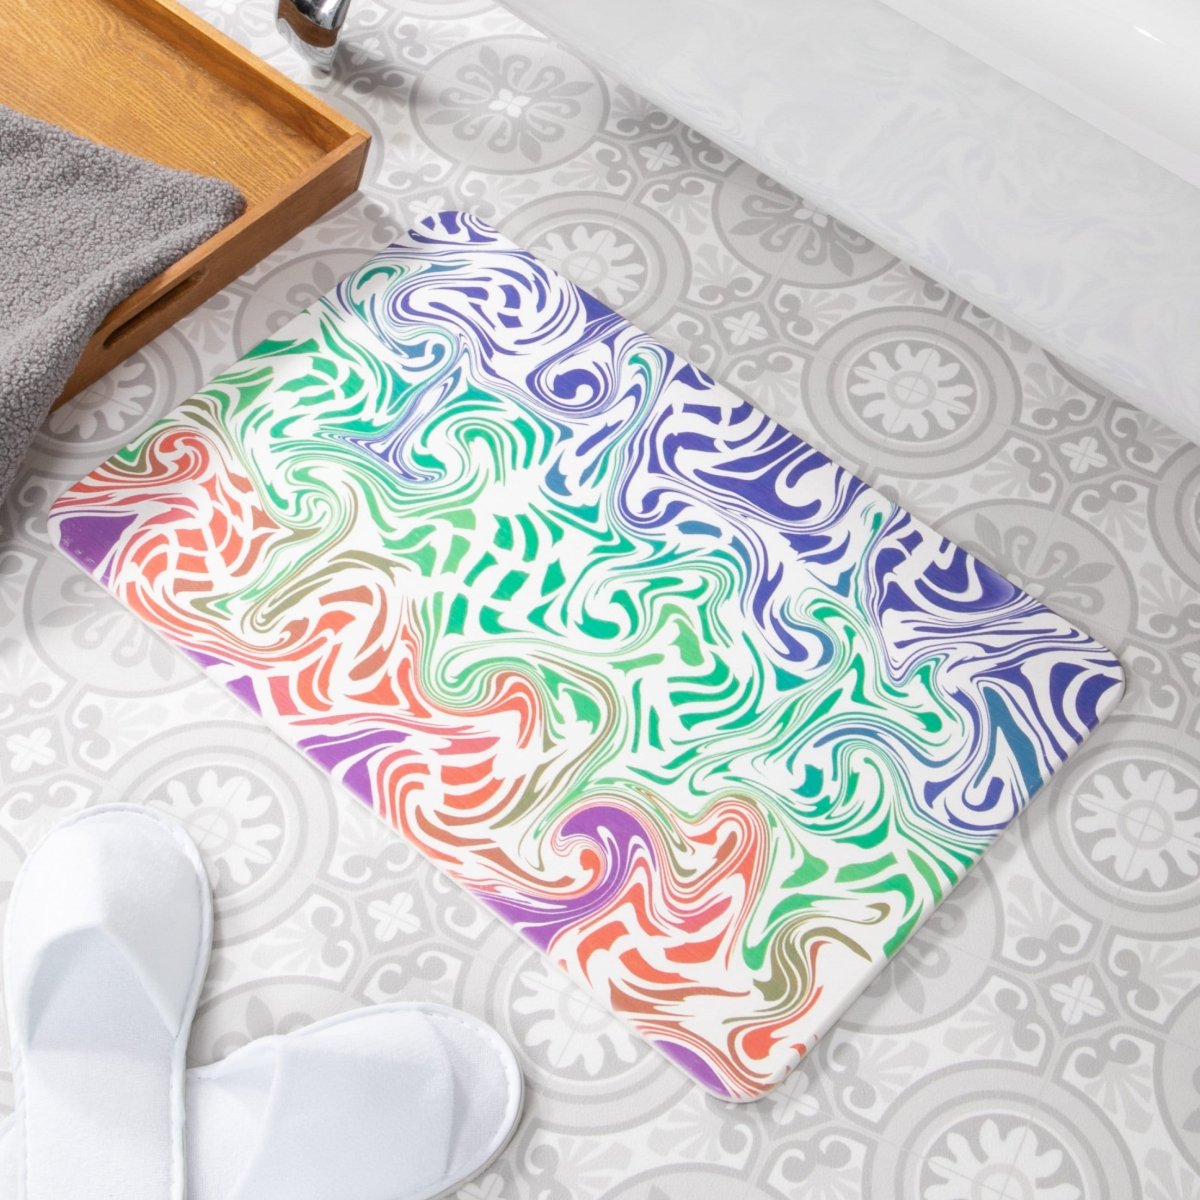 Rainbow Swirls Bathmat - Beautiful Swirls Mat - Natural & Eco-Friendly - Beach Home -Bathroom Decor - White Stone Nonslip Bath Mat - 39X60Cm - Slips Away - 1330581974 -